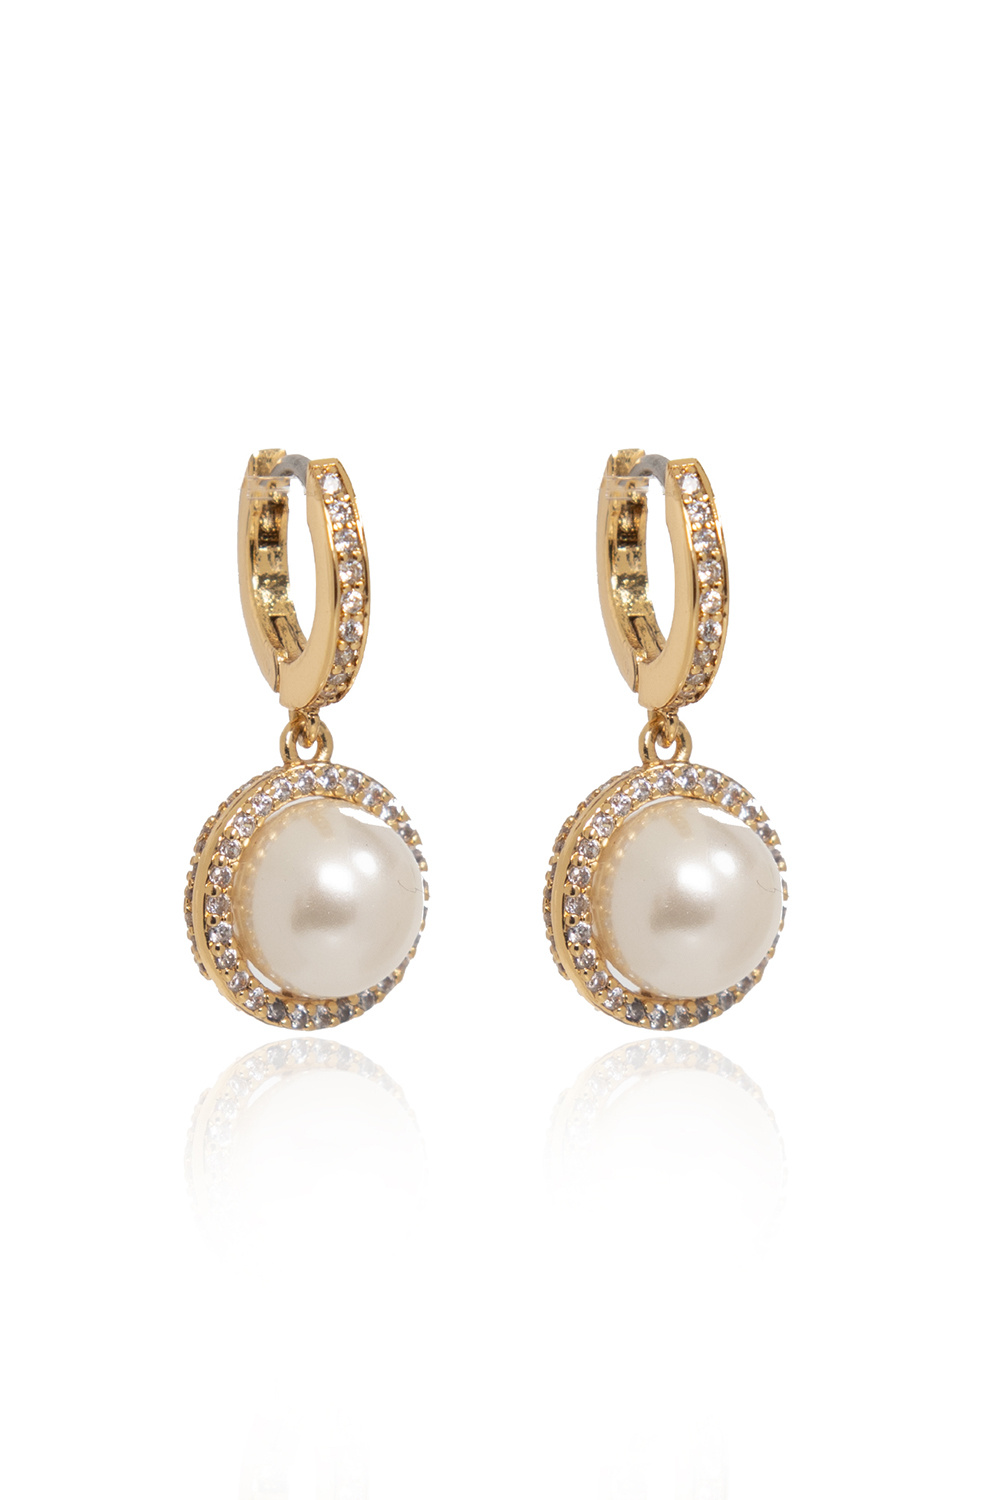 Kate Spade Charm earrings